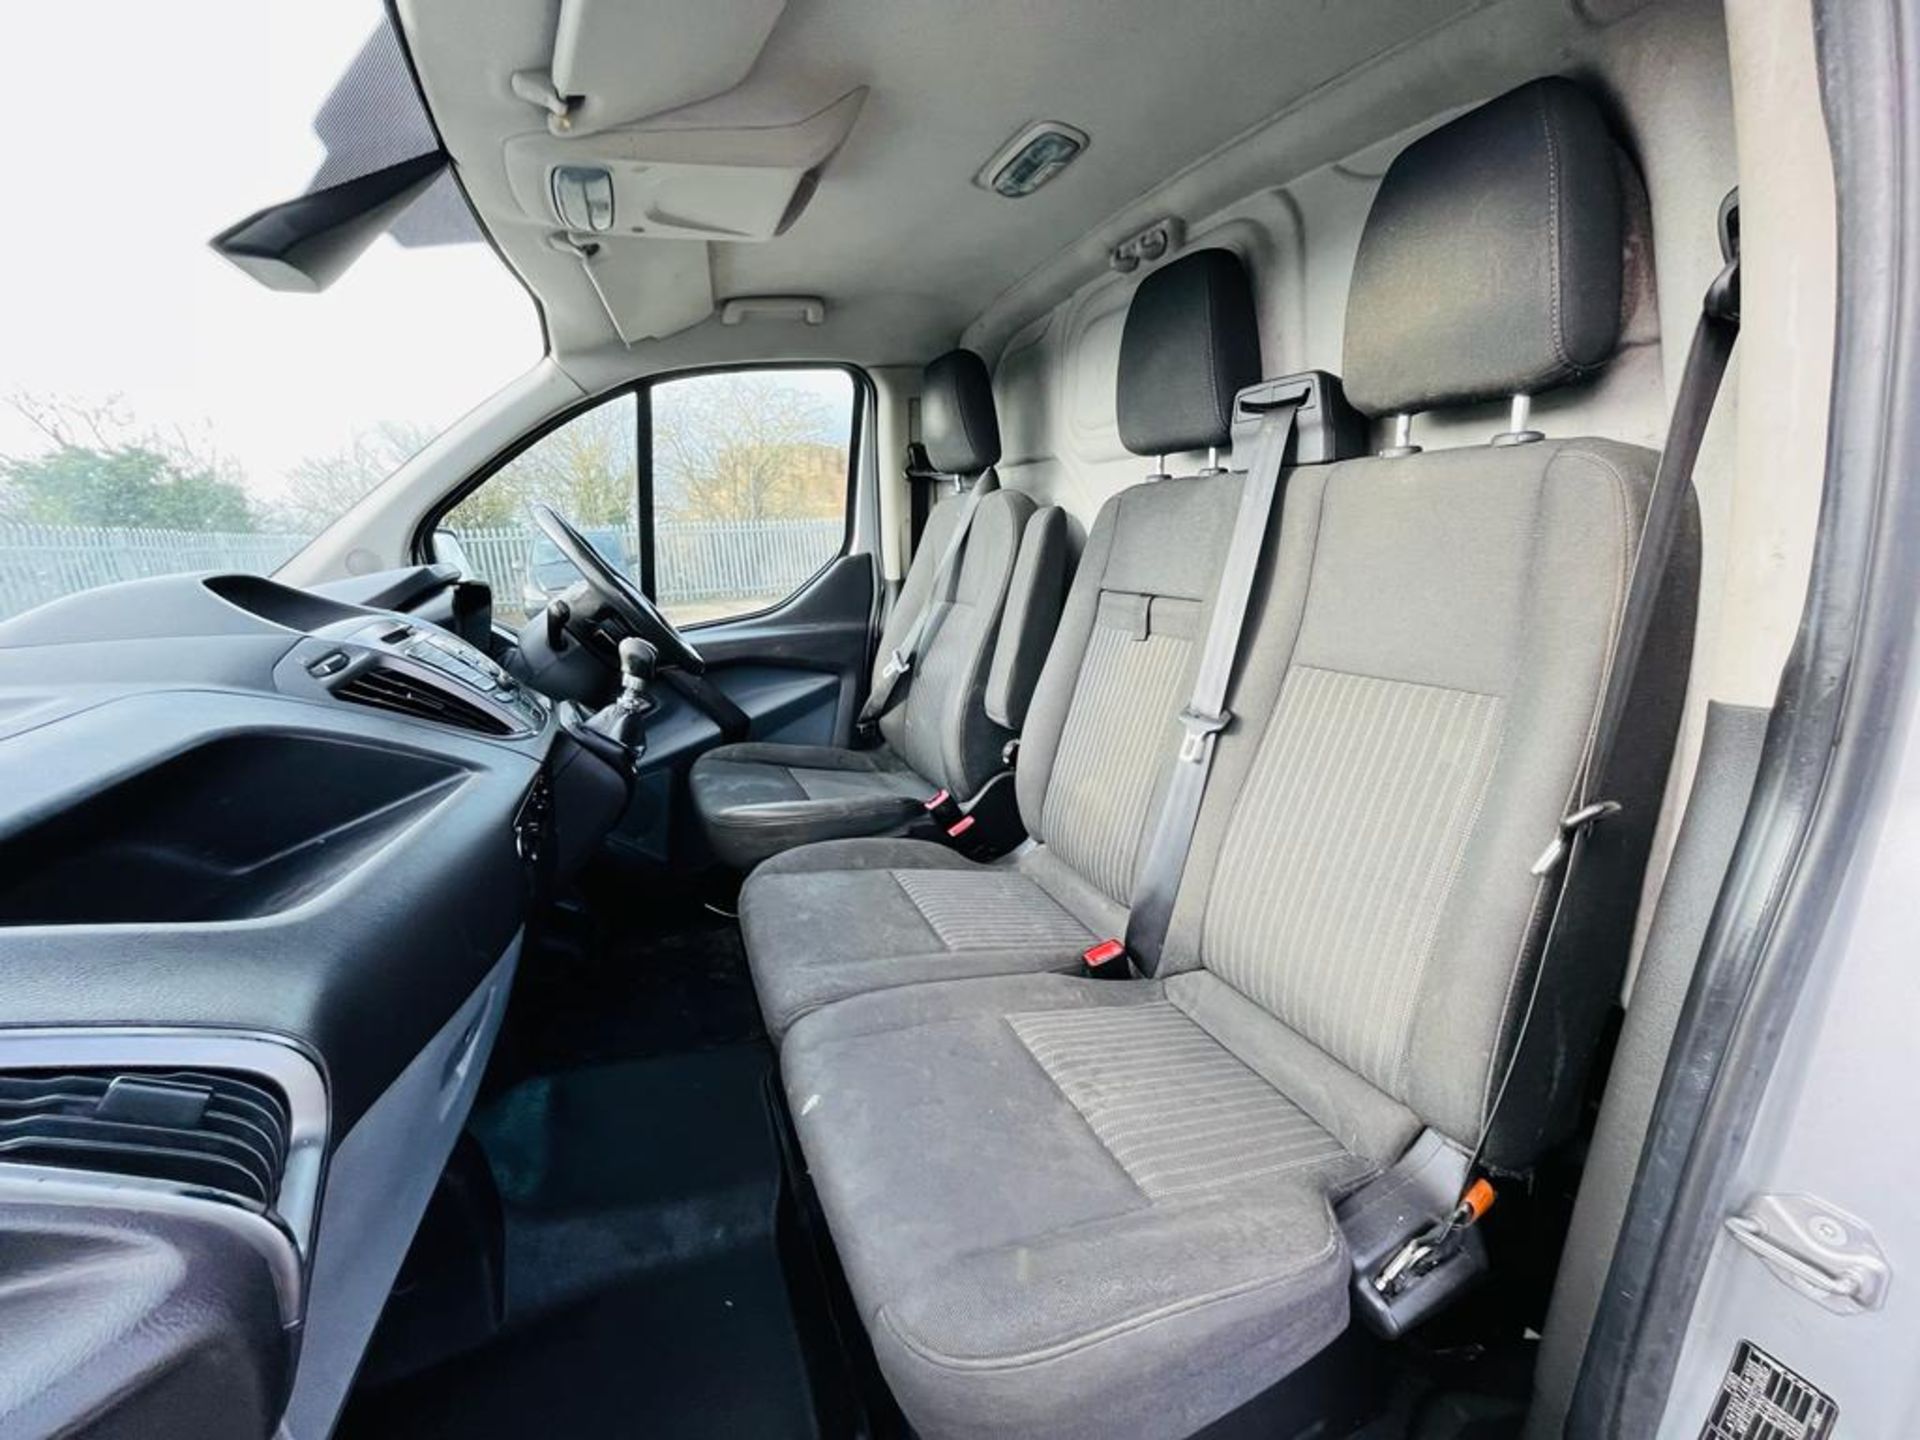 Ford Transit Custom 2.2 TDCI Trend E-Tech 2015 '15 Reg' - Panel Van - Image 20 of 22